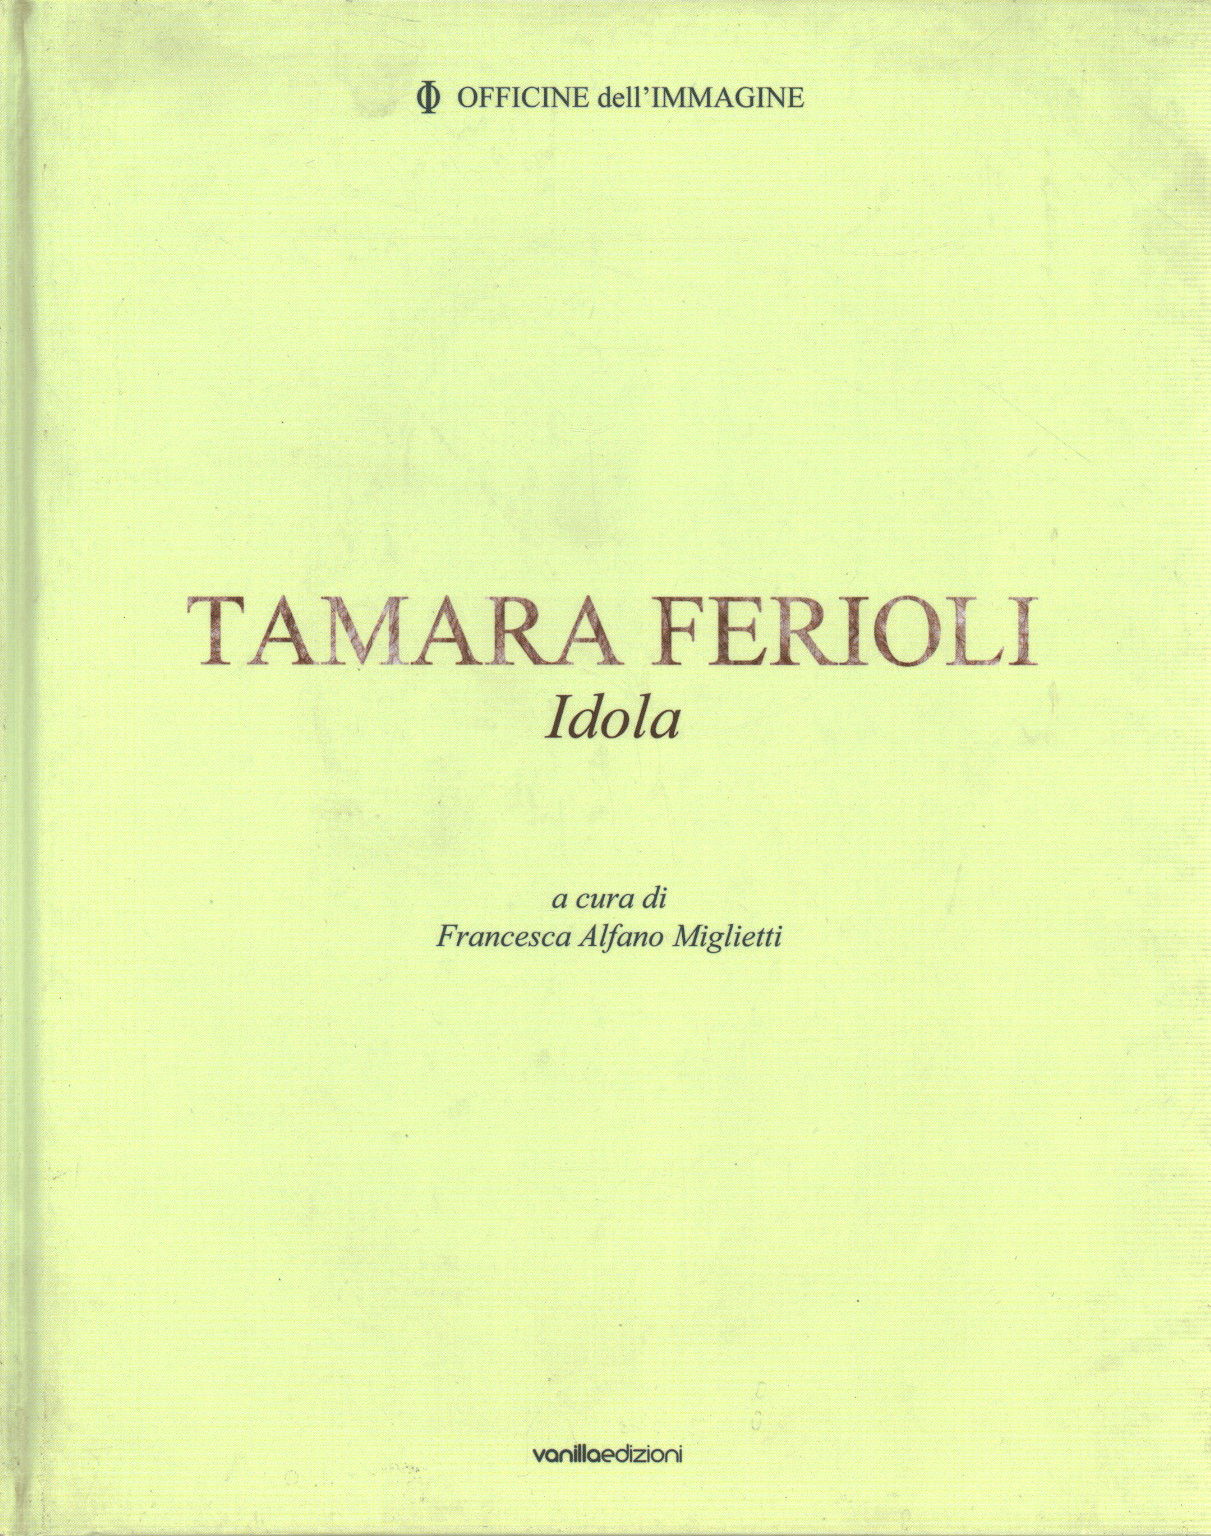 Tamara Ferioli. Idola, s.a.